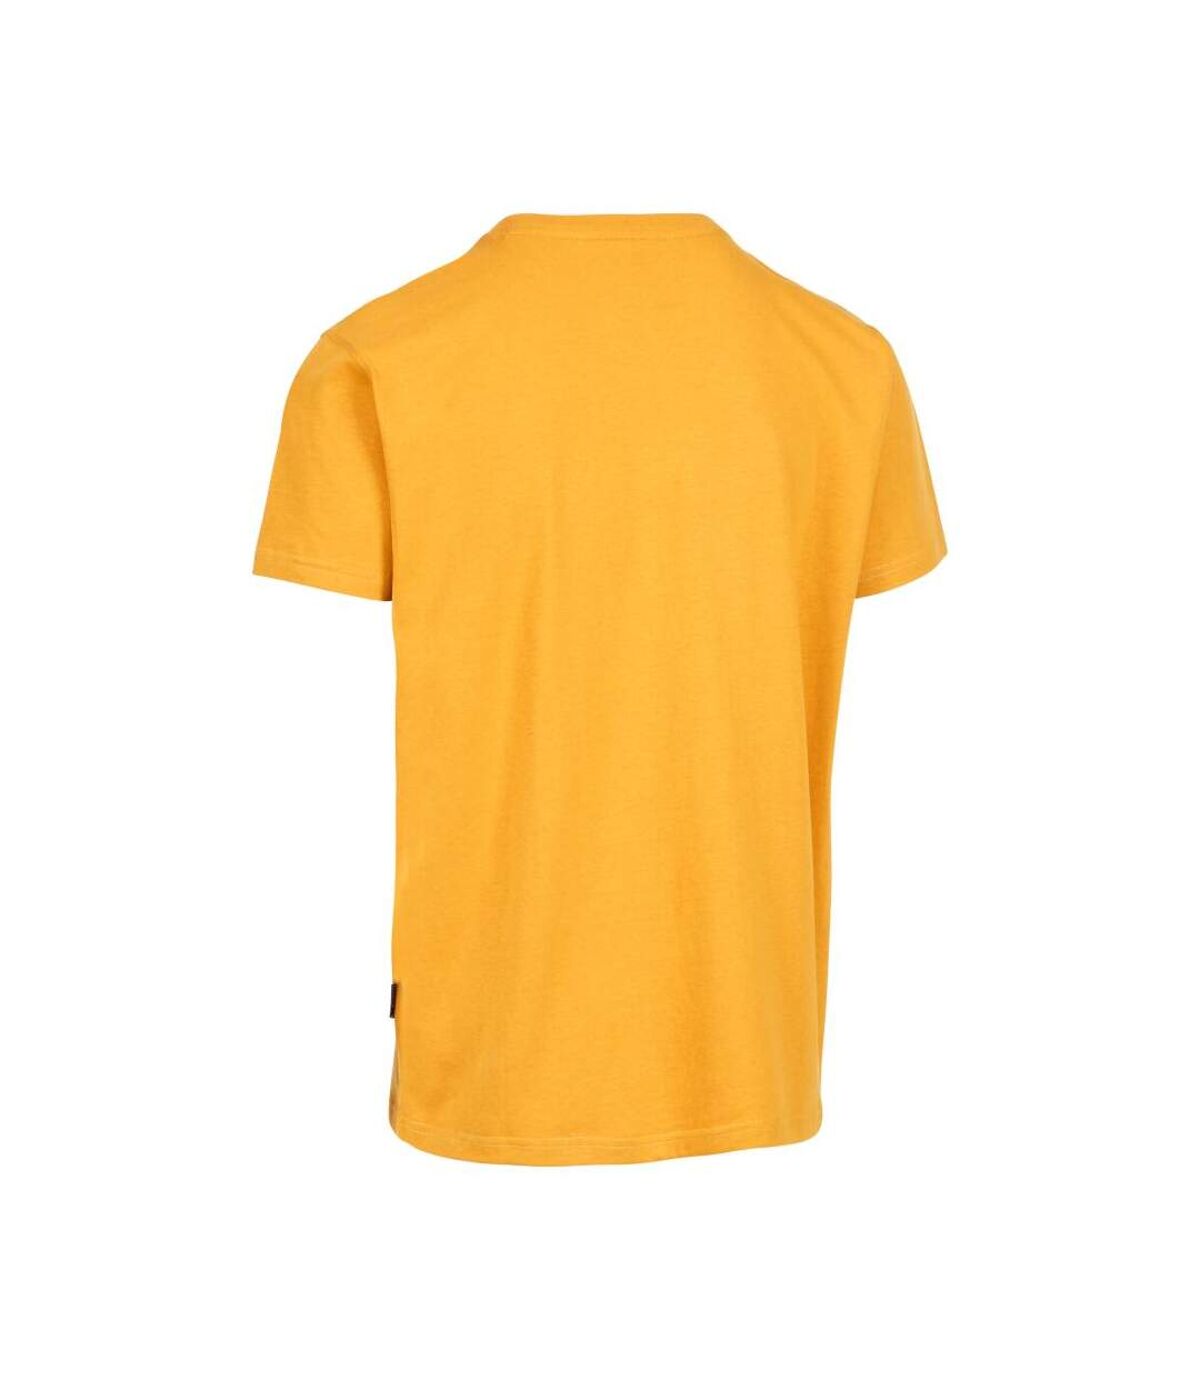 Trespass - T-shirt DAYTONA - Homme (Jaune vif) - UTTP5472